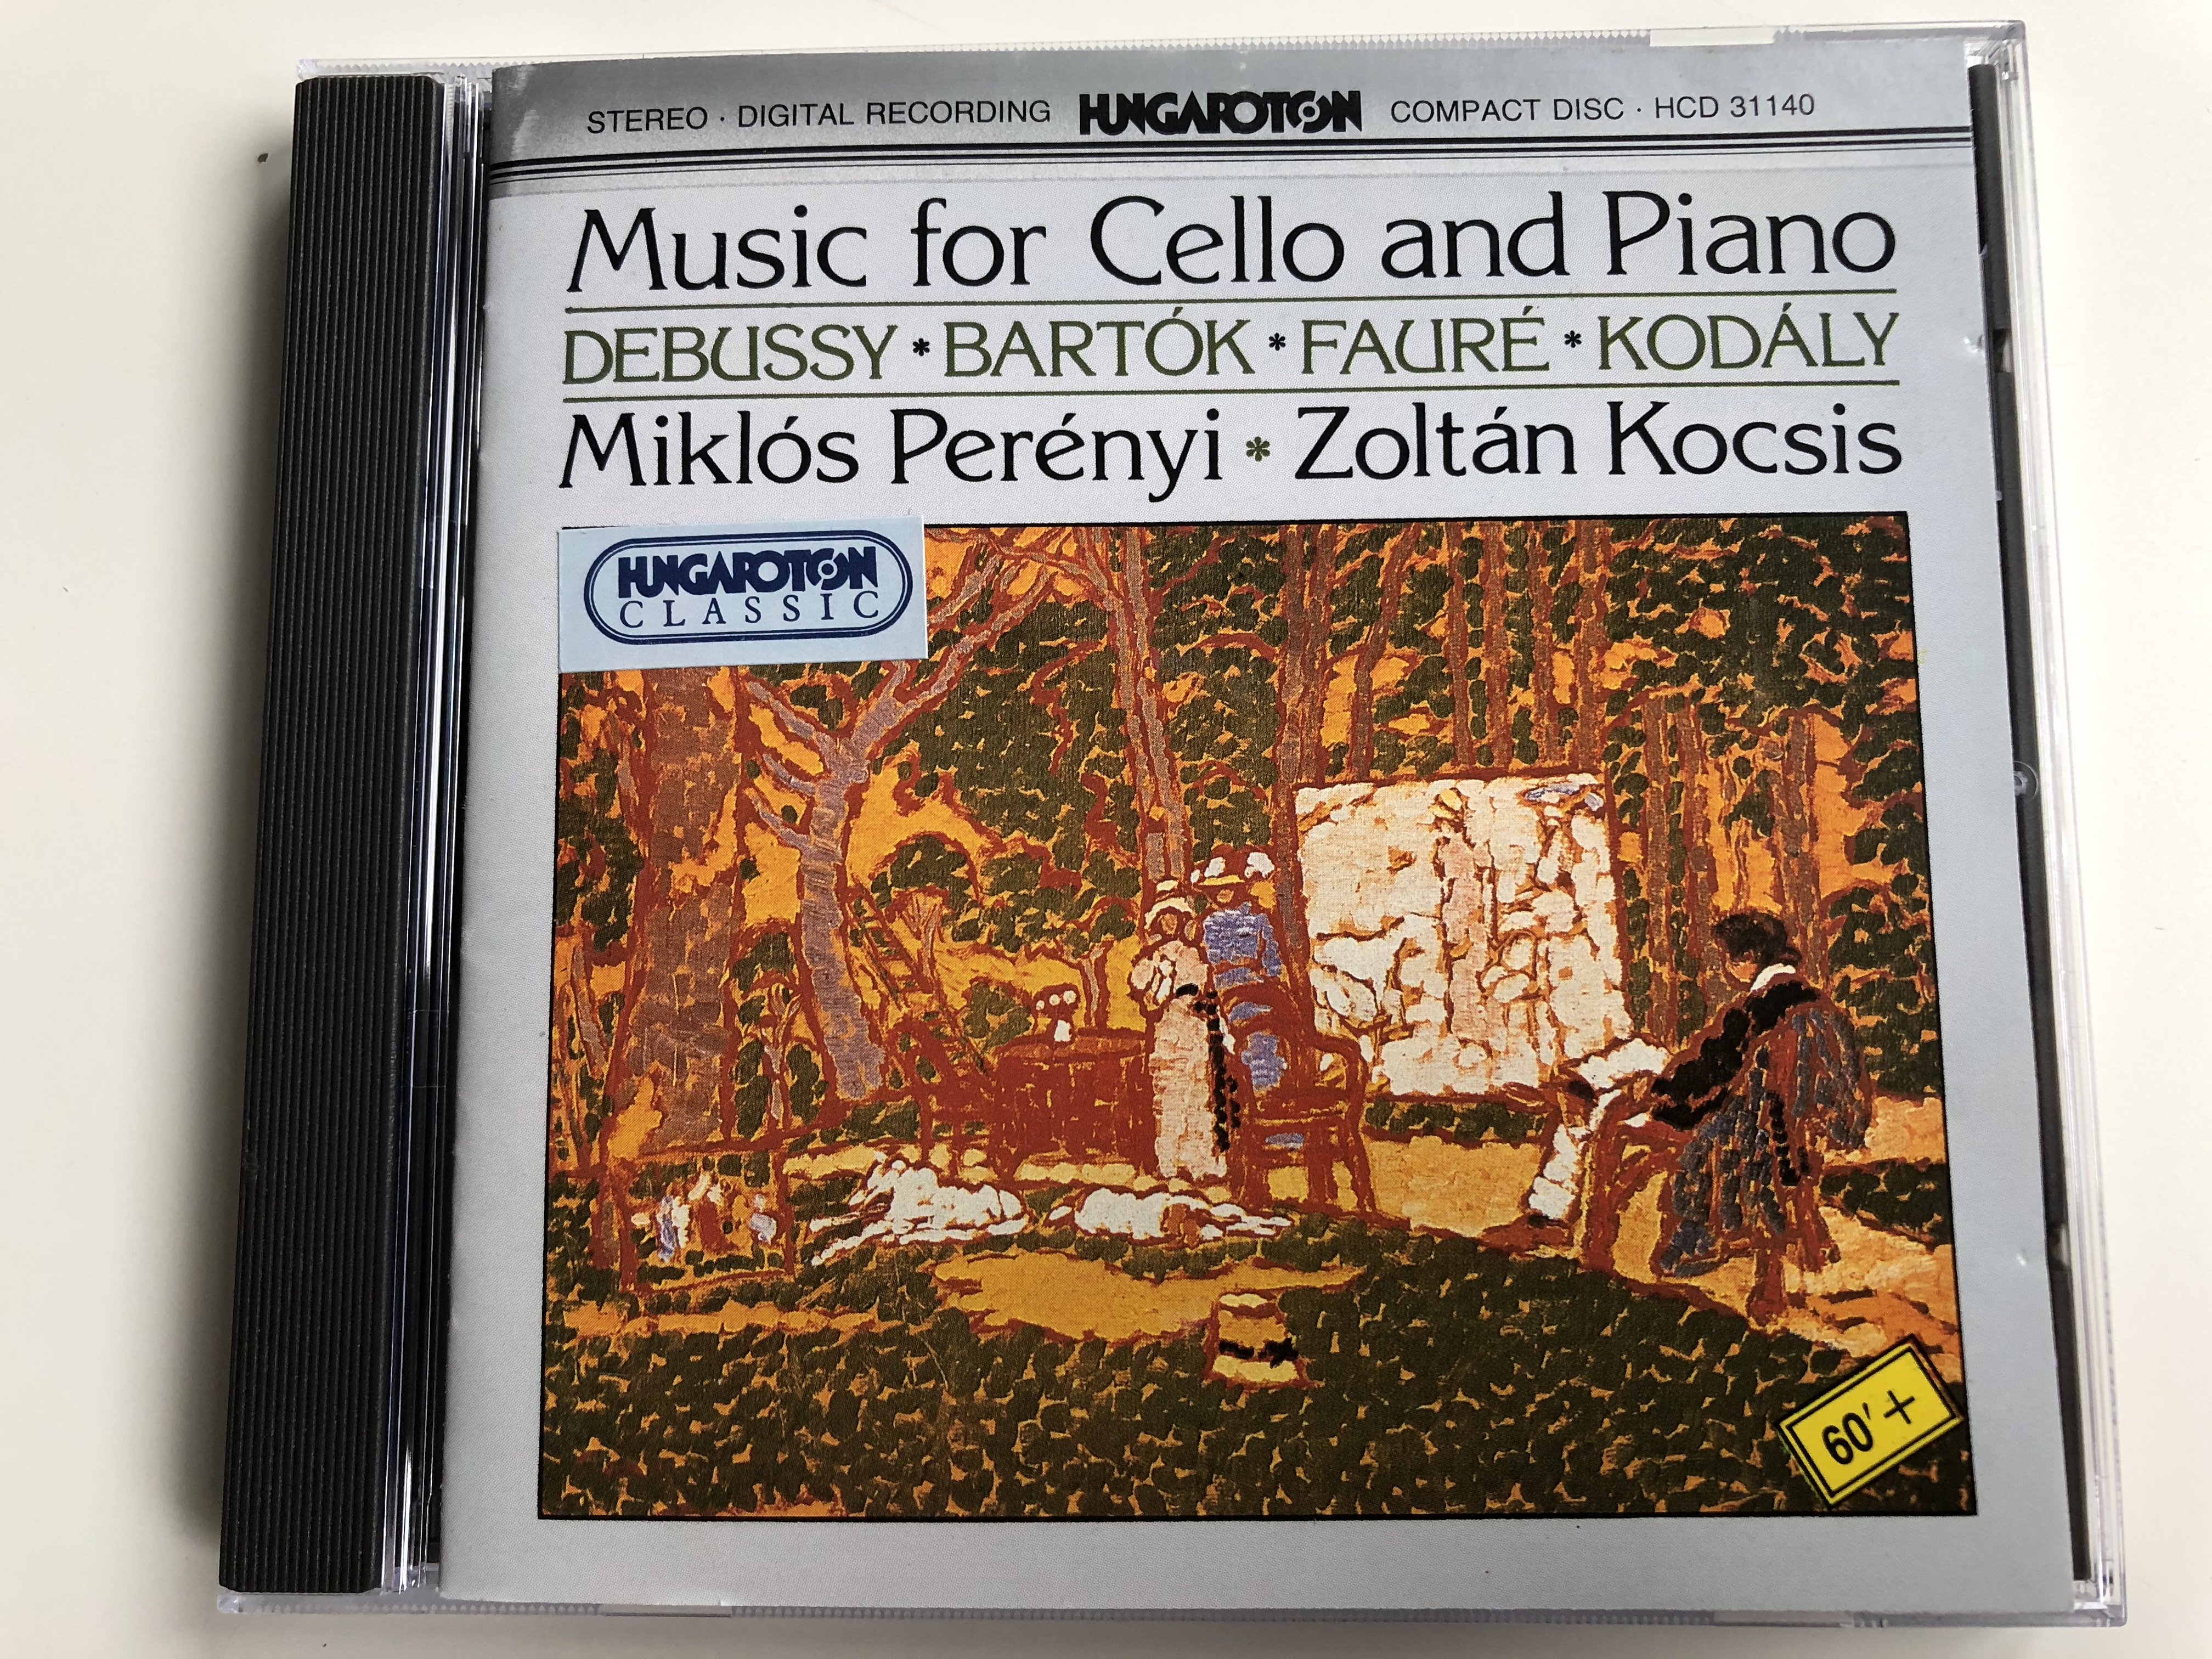 music-for-cello-and-piano-debussy-bartok-faure-kodaly-miklos-perenyi-zoltan-kocsis-hungaroton-classic-audio-cd-1994-stereo-hcd-31140-1-.jpg